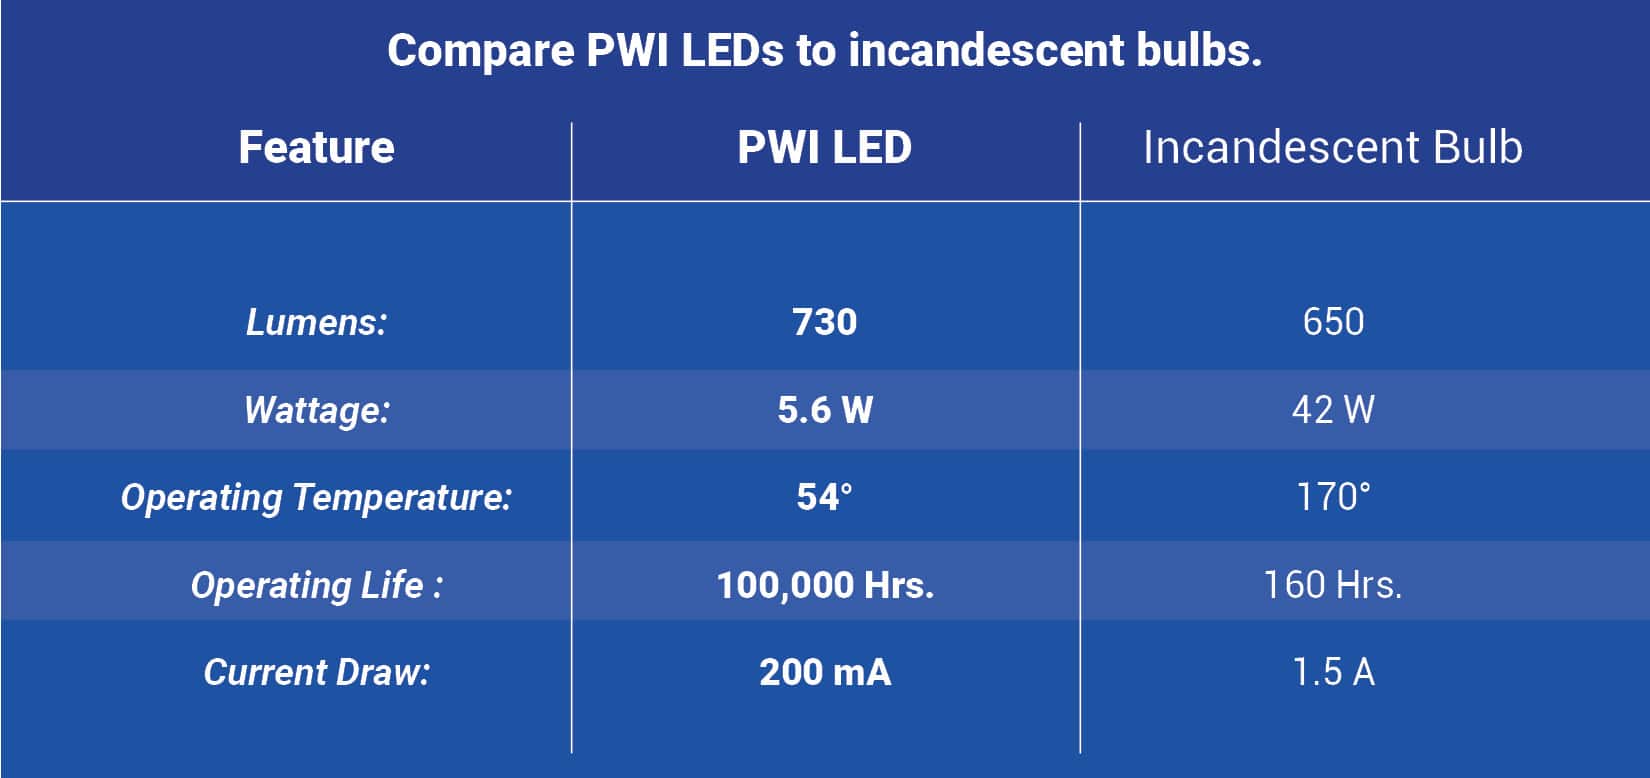 PWI LED vs Incandescent bulb